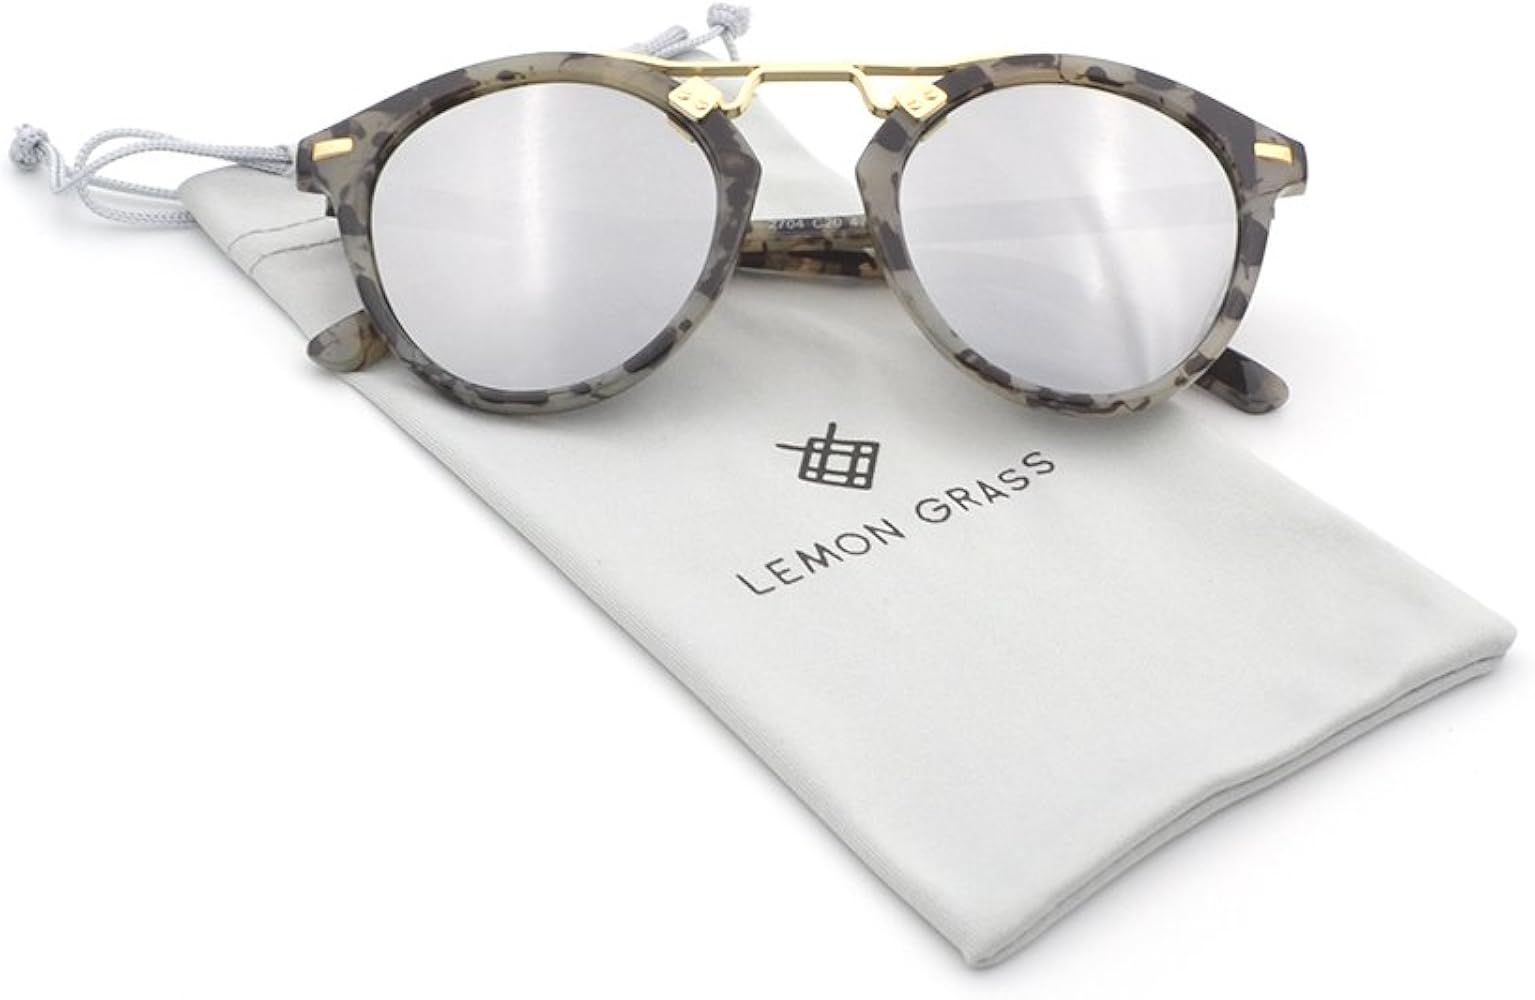 Womens Sunglasses Vintage Retro Round Mirrored Lens Horned Rim Sunglasses | Amazon (US)